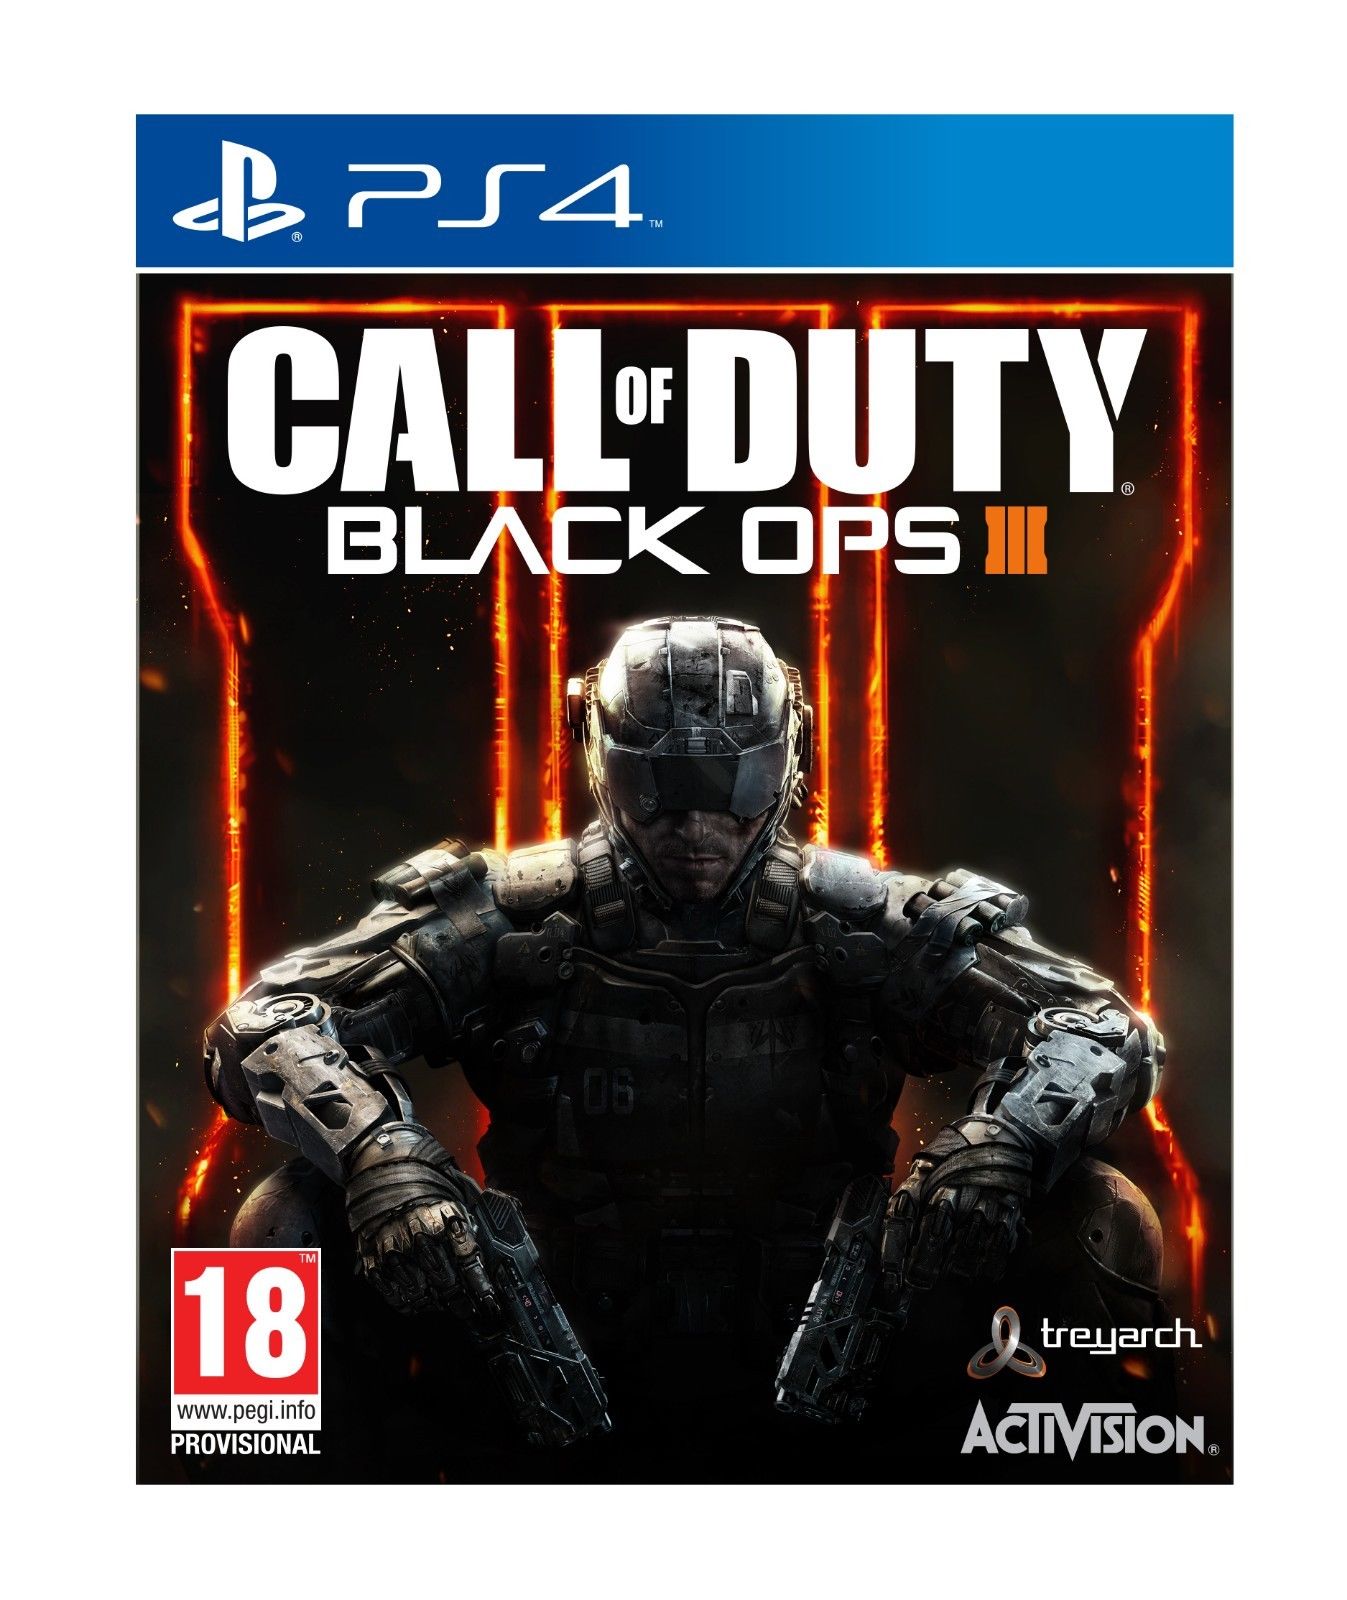 Call of Duty BLACK OPS III 3 (CoD) - PS4 game